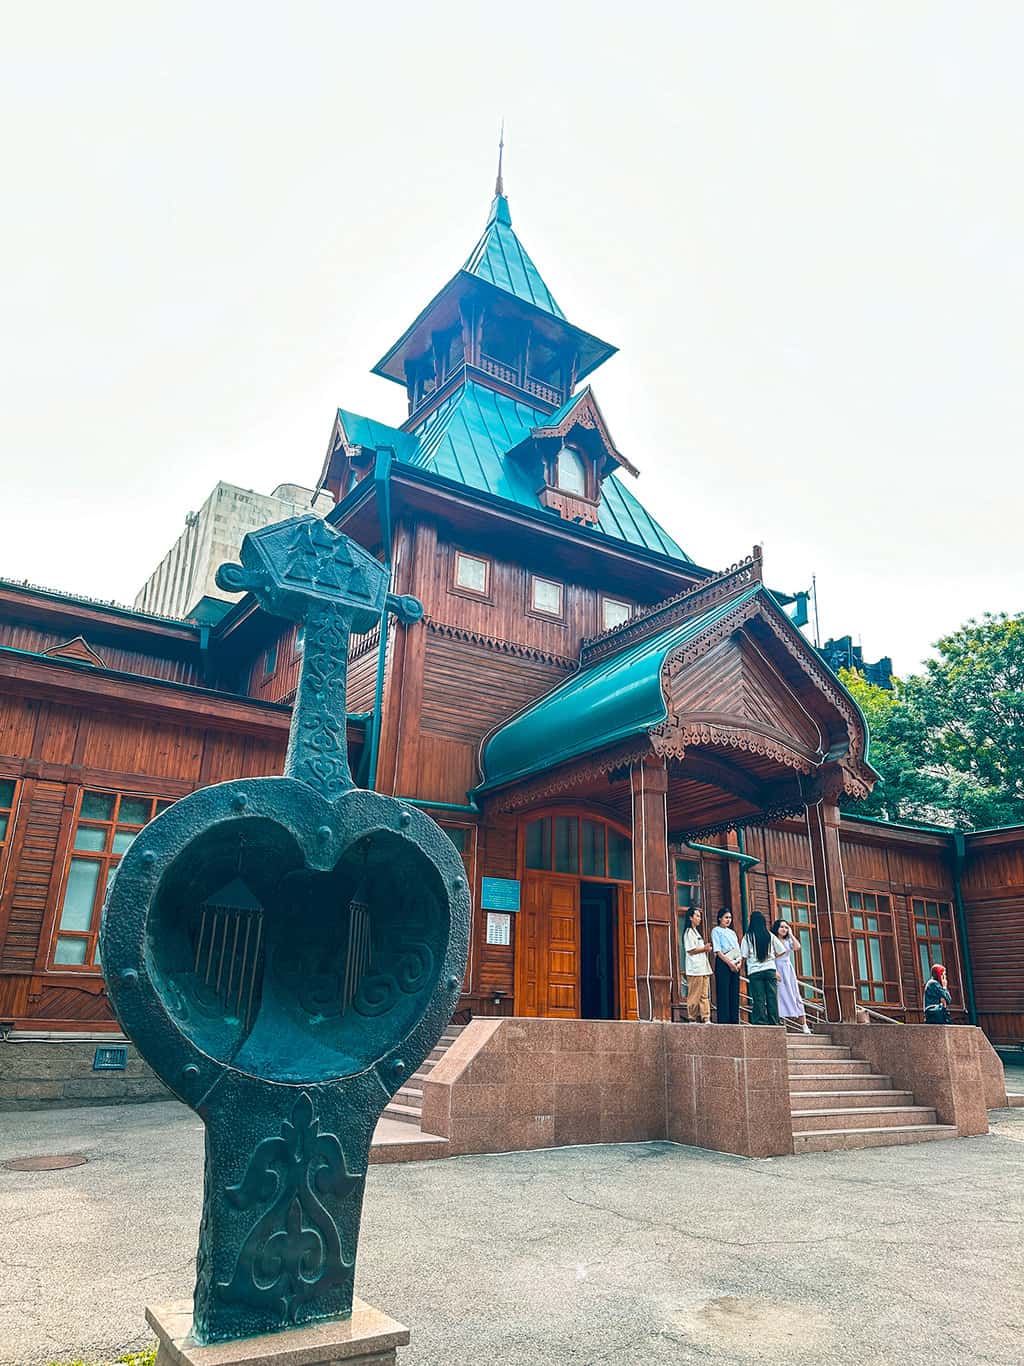 Kazakh Museum of Folk Musical Instruments Almaty Kazakhstan